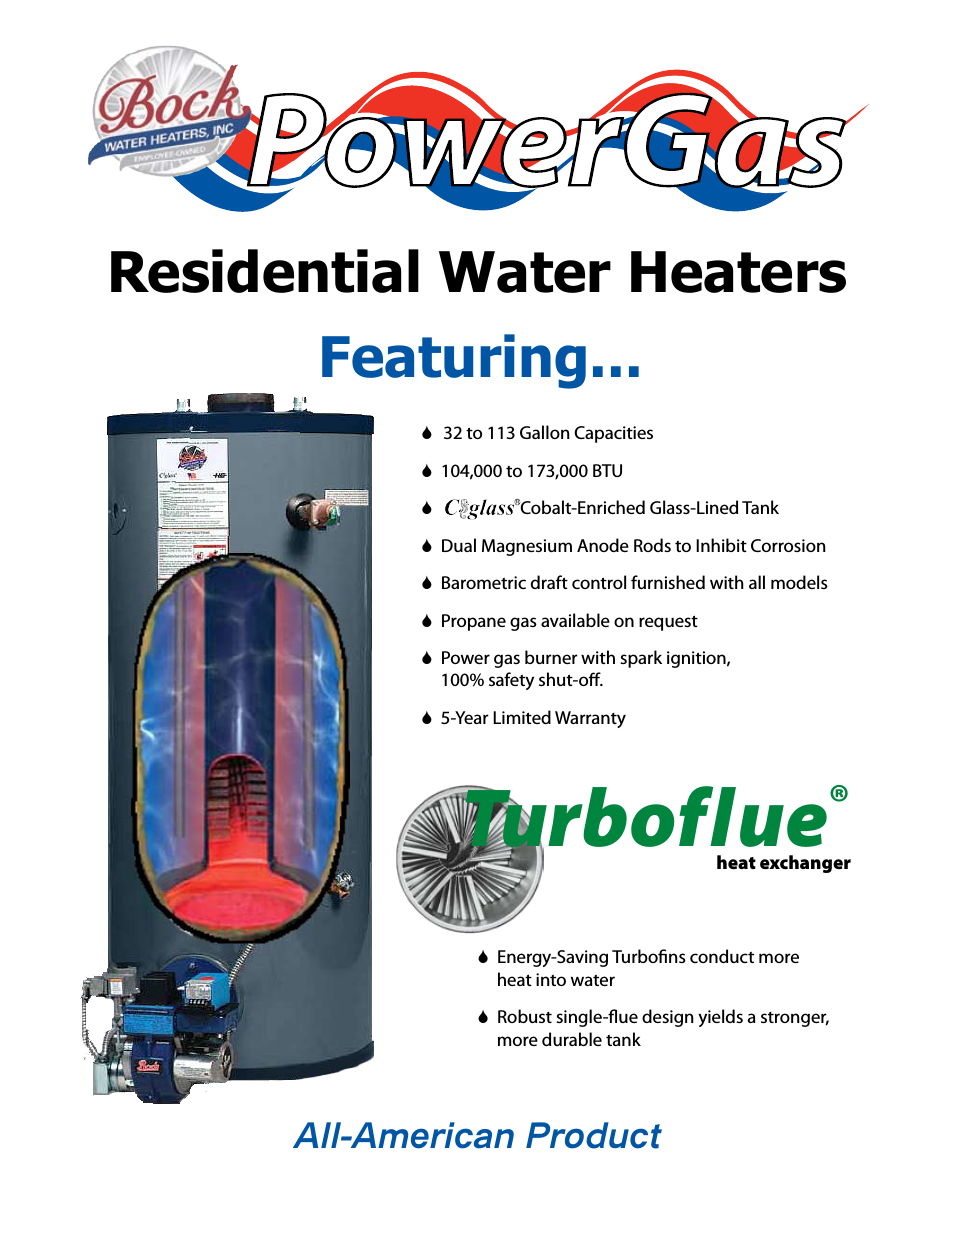 Turboflue Residential Power Gas Water Heater